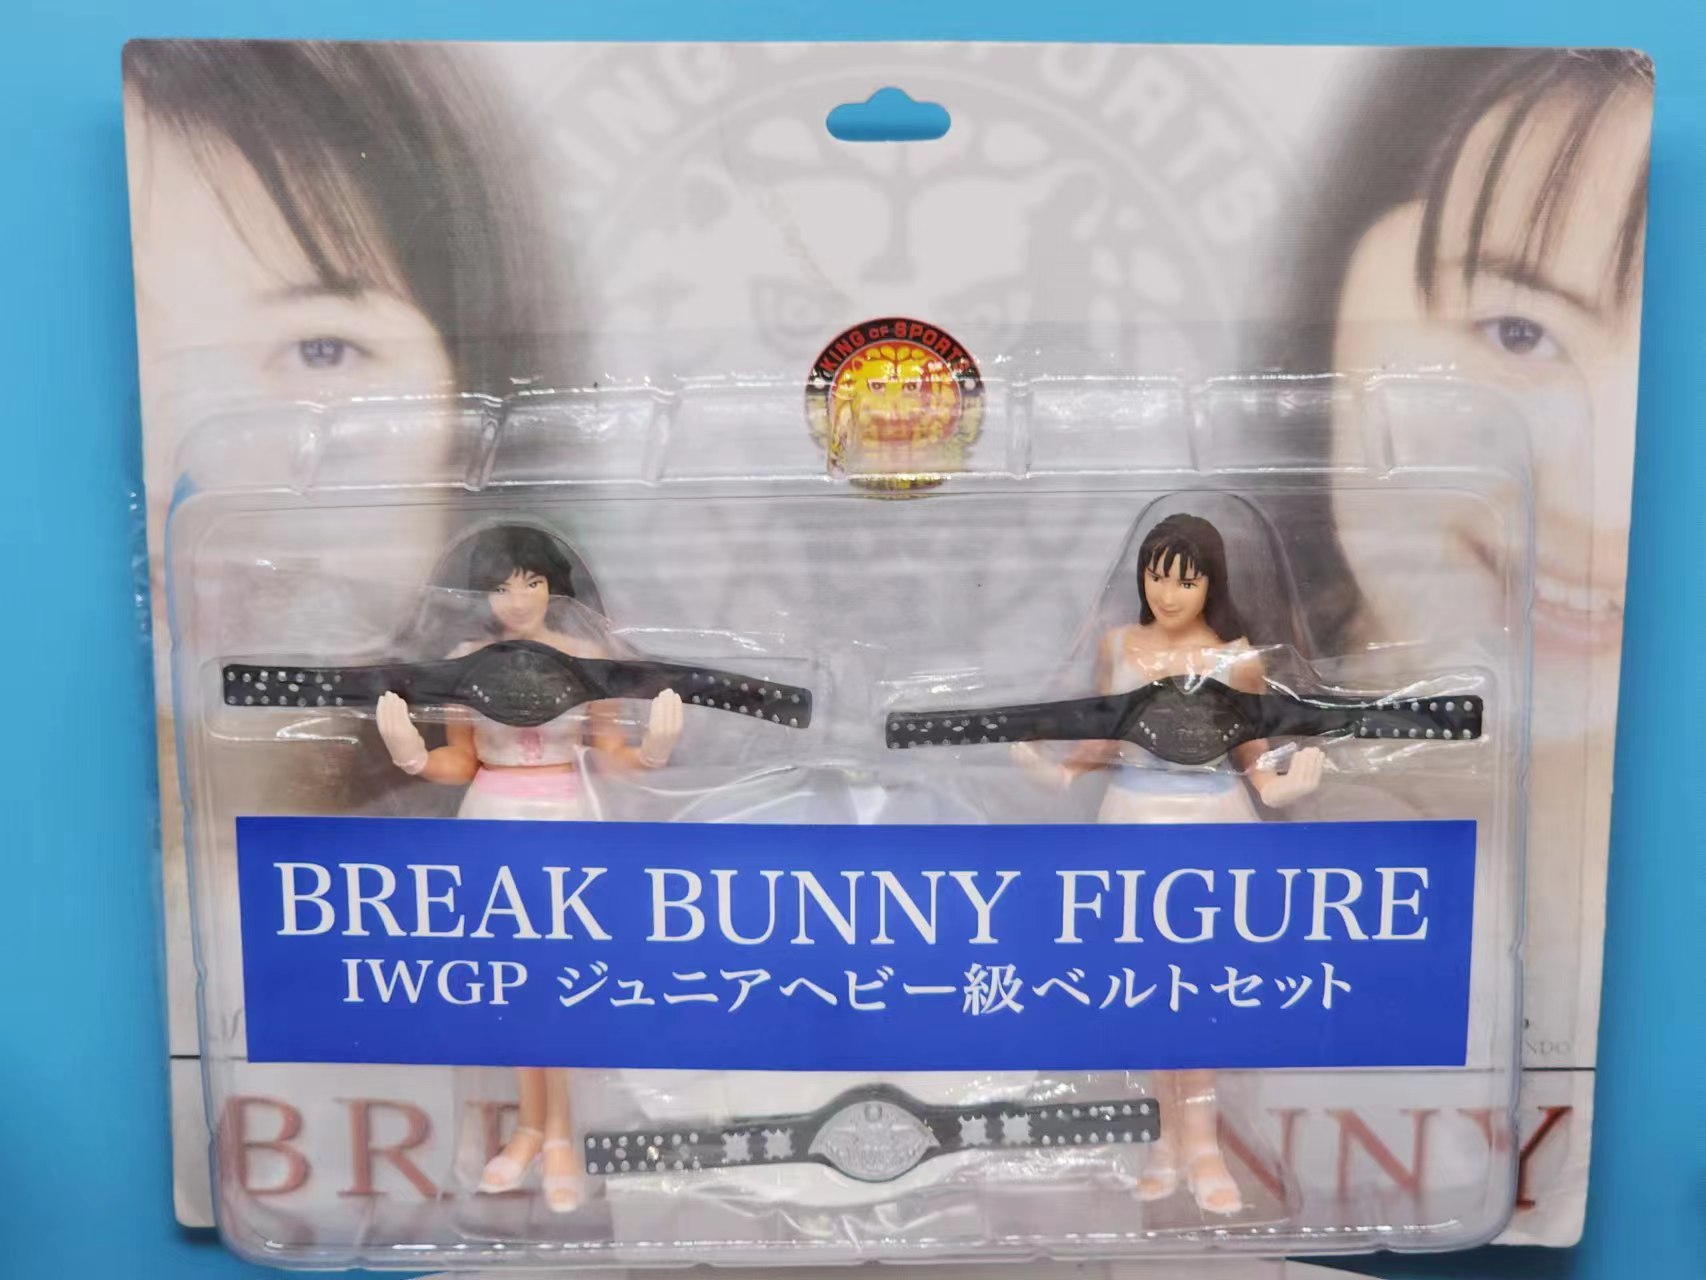 Japanese Wrestling Figure Charapro Break Bunny